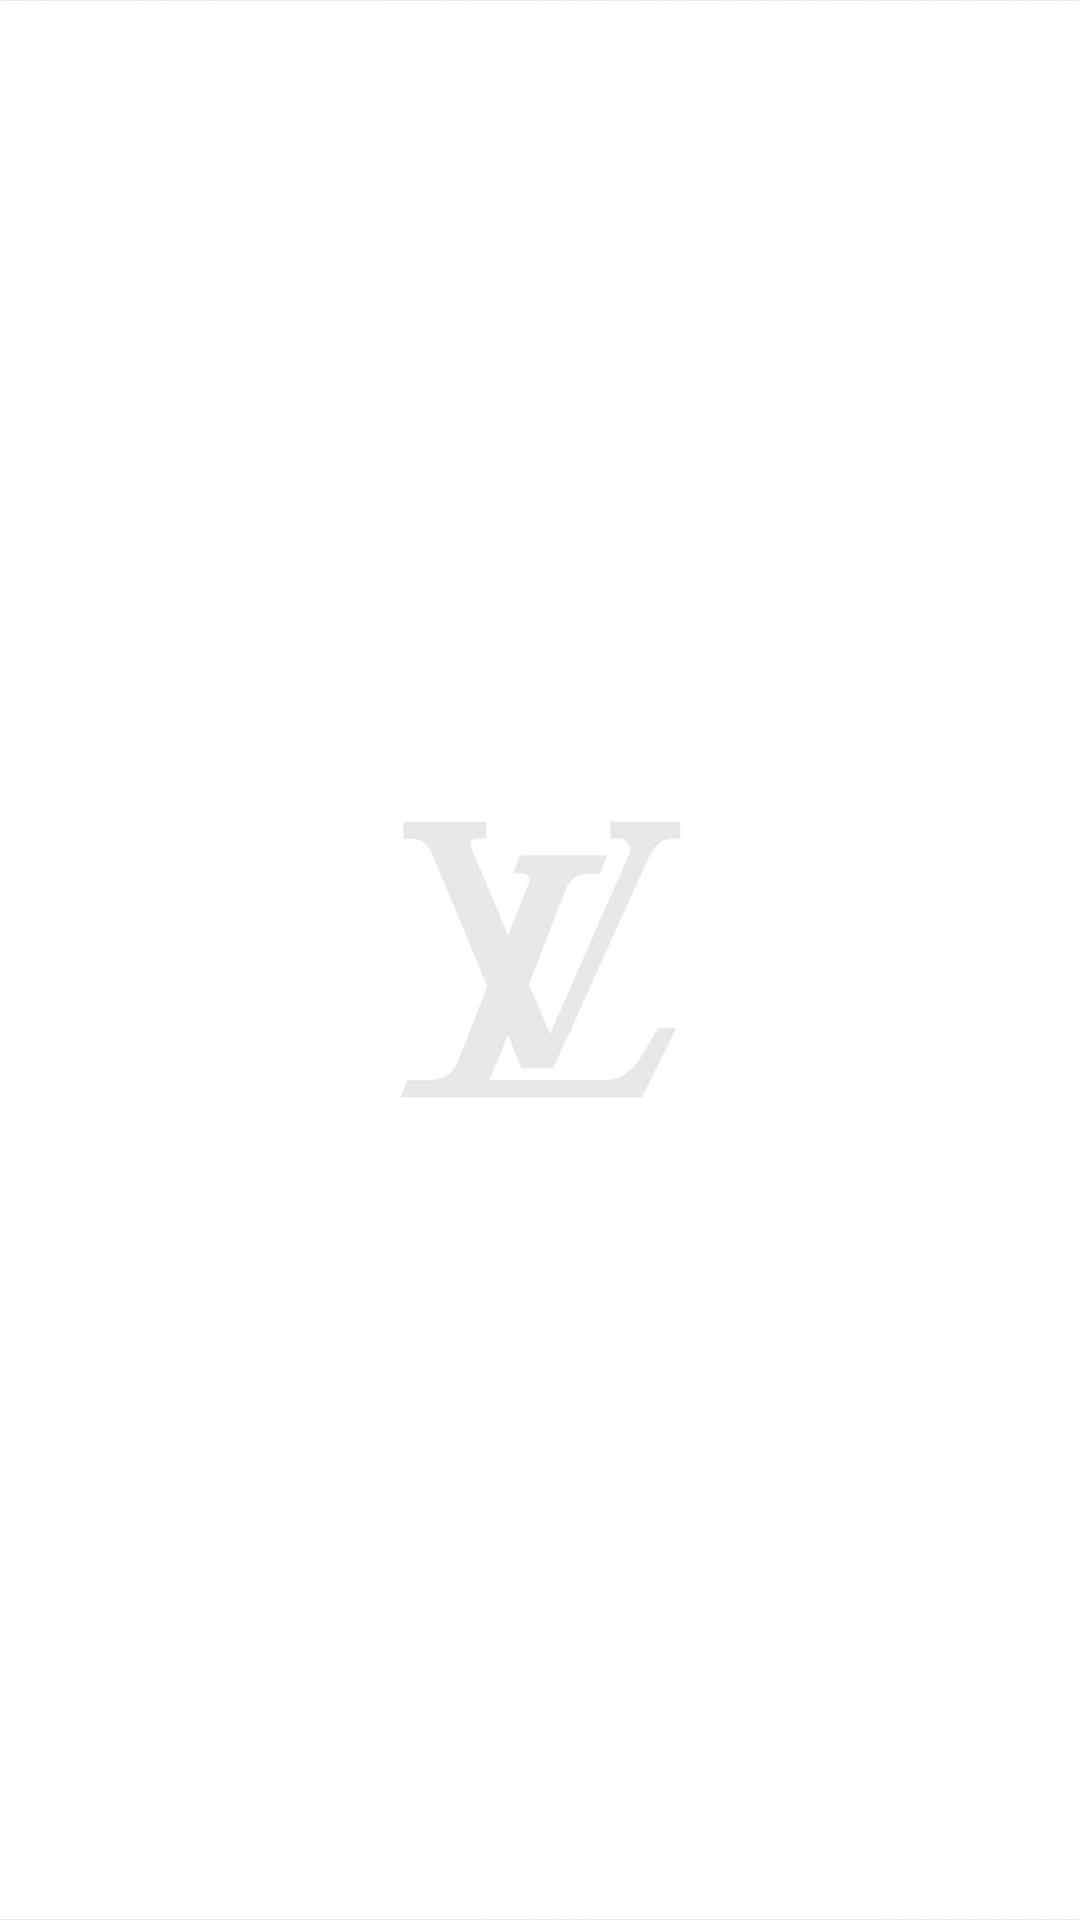 louisvuitton i14 - LOUIS VUITTON[ルイ・ヴィトン]の高画質スマホ壁紙20枚 [iPhone＆Androidに対応]